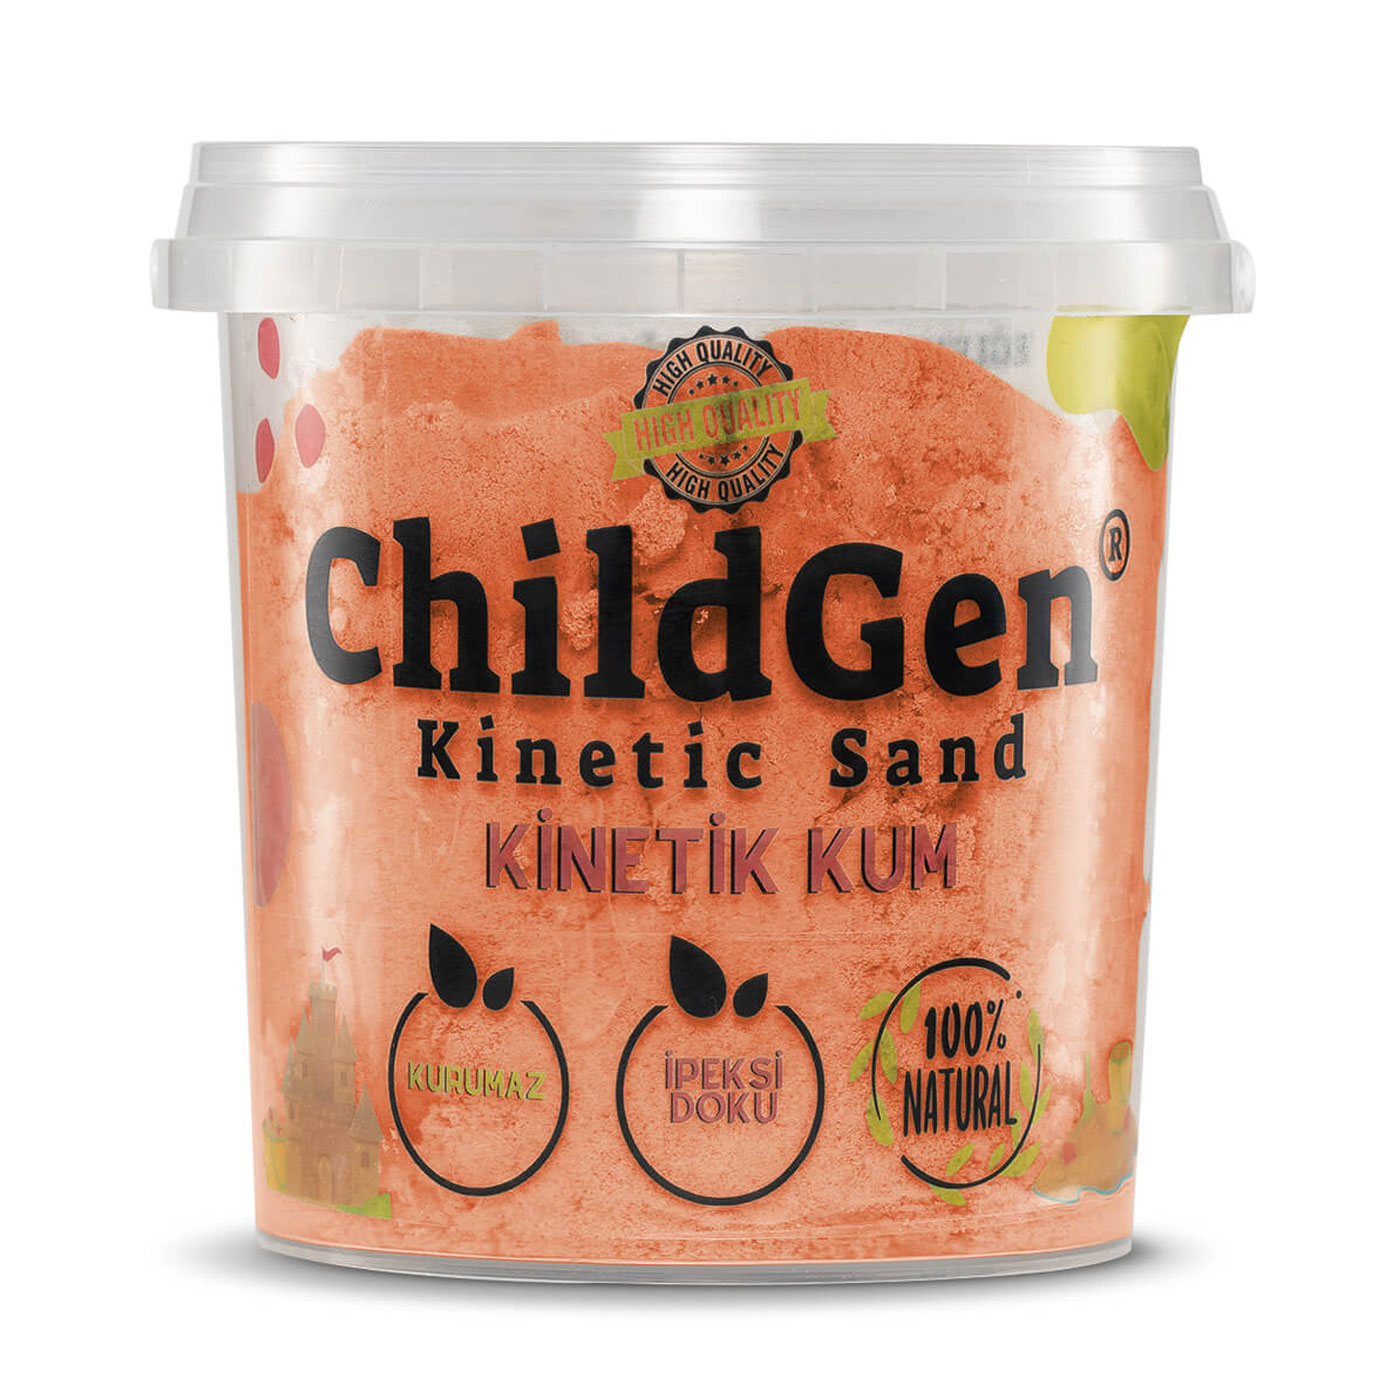  Childgen Kinetik Kum 500 gr | Turuncu